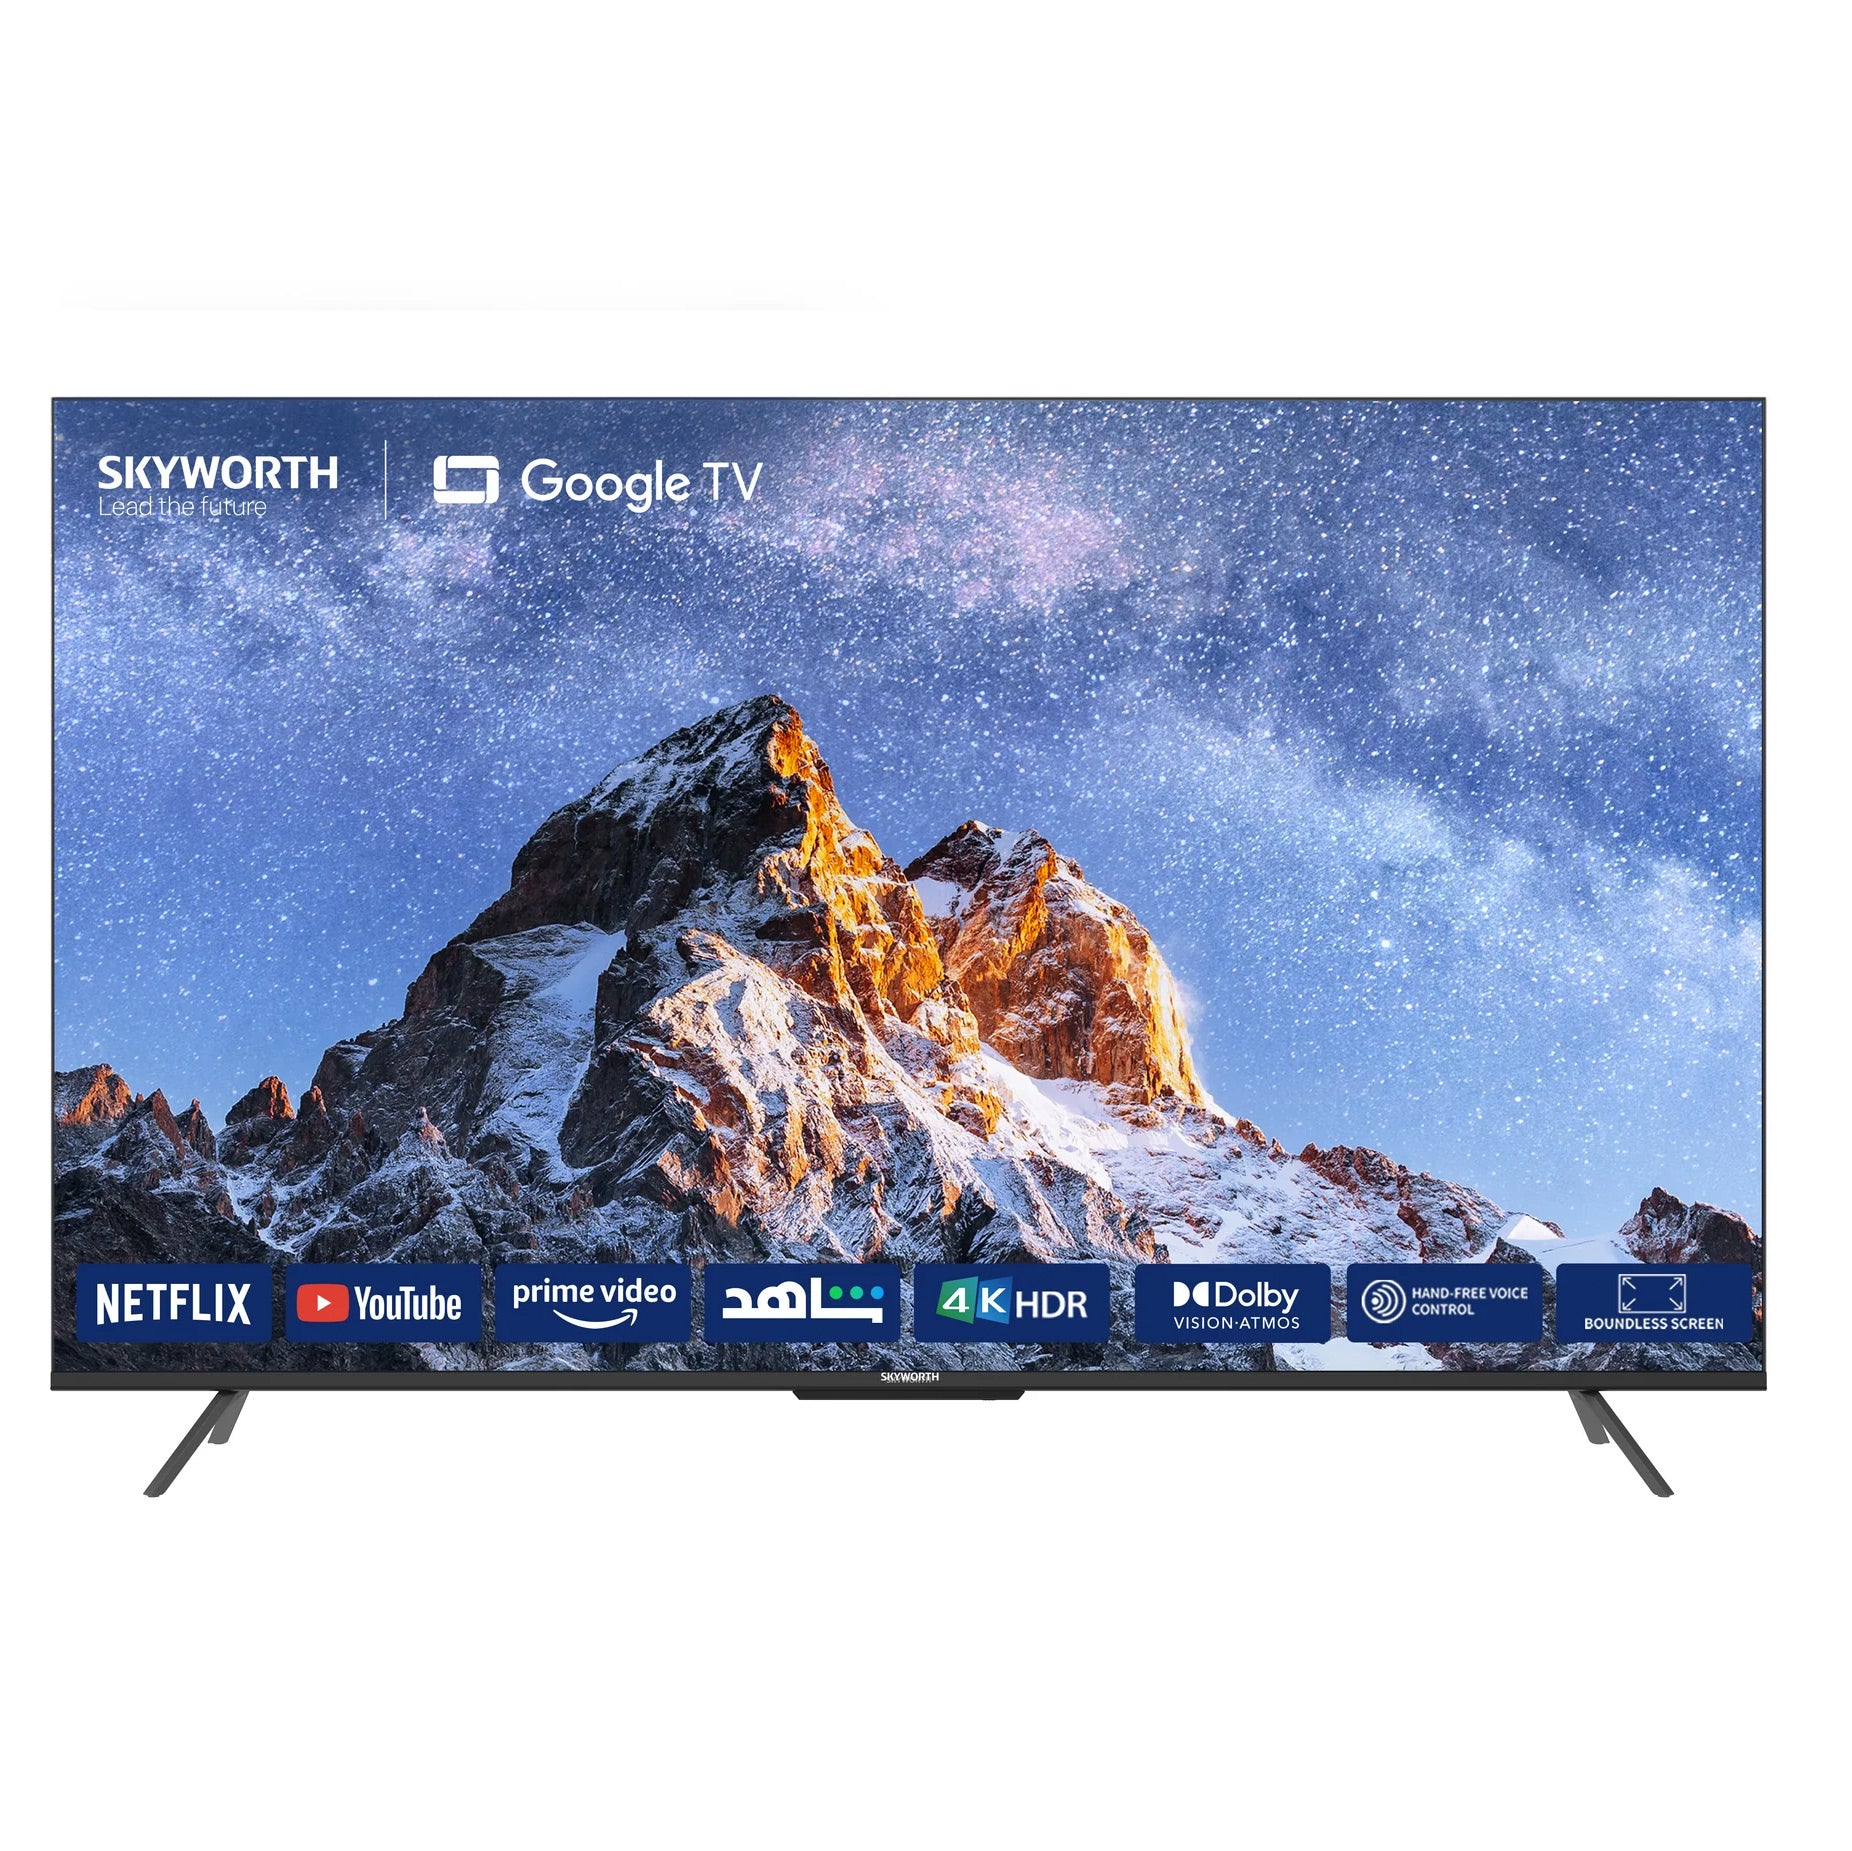 Ofertas en televisores baratos, Smart TV, LED, 4k